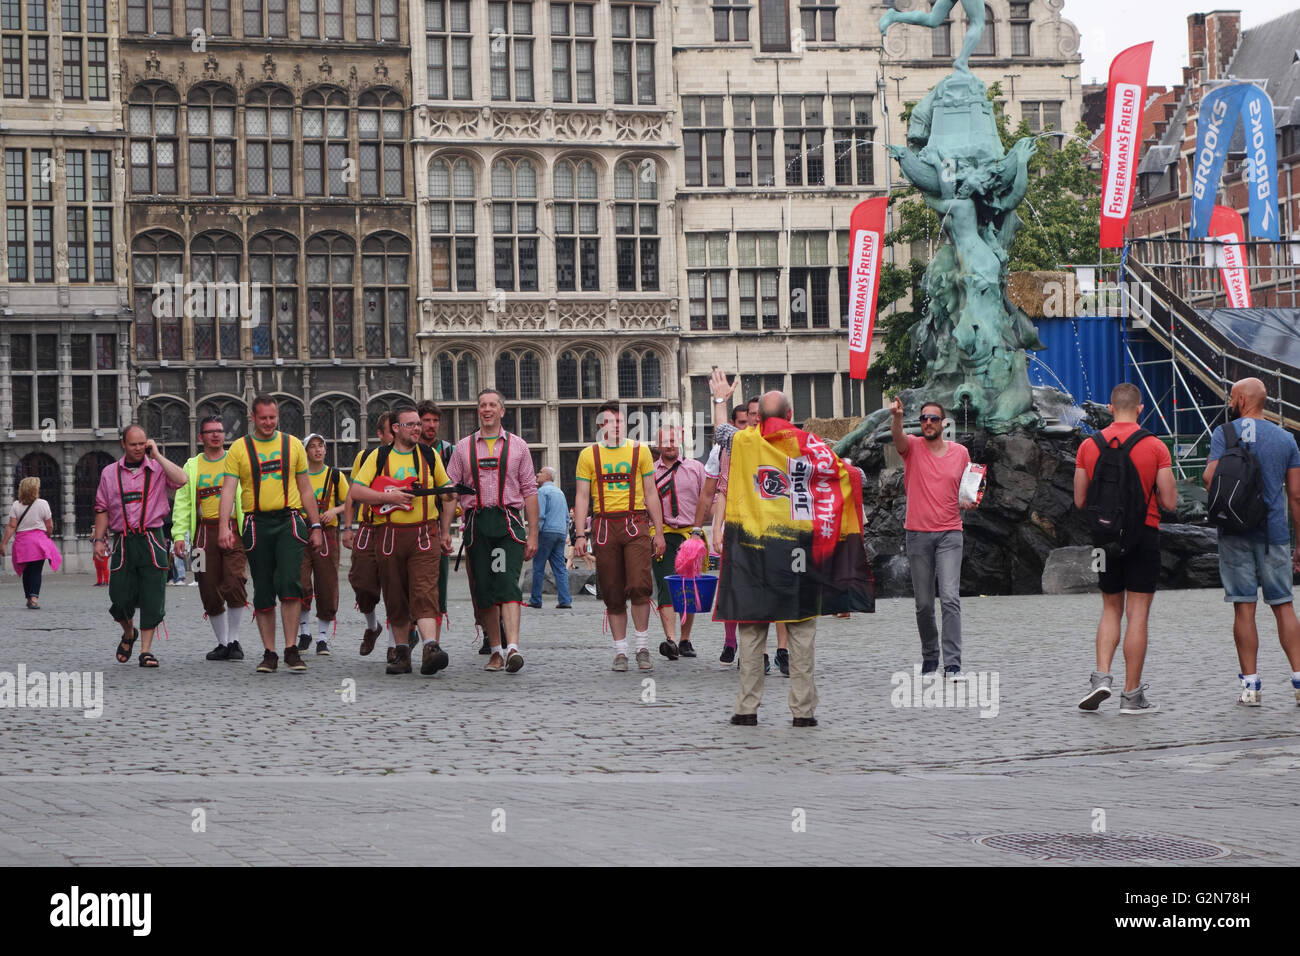 Junggesellenabschied im Zentrum von Antwerpen, Belgien Stockfoto